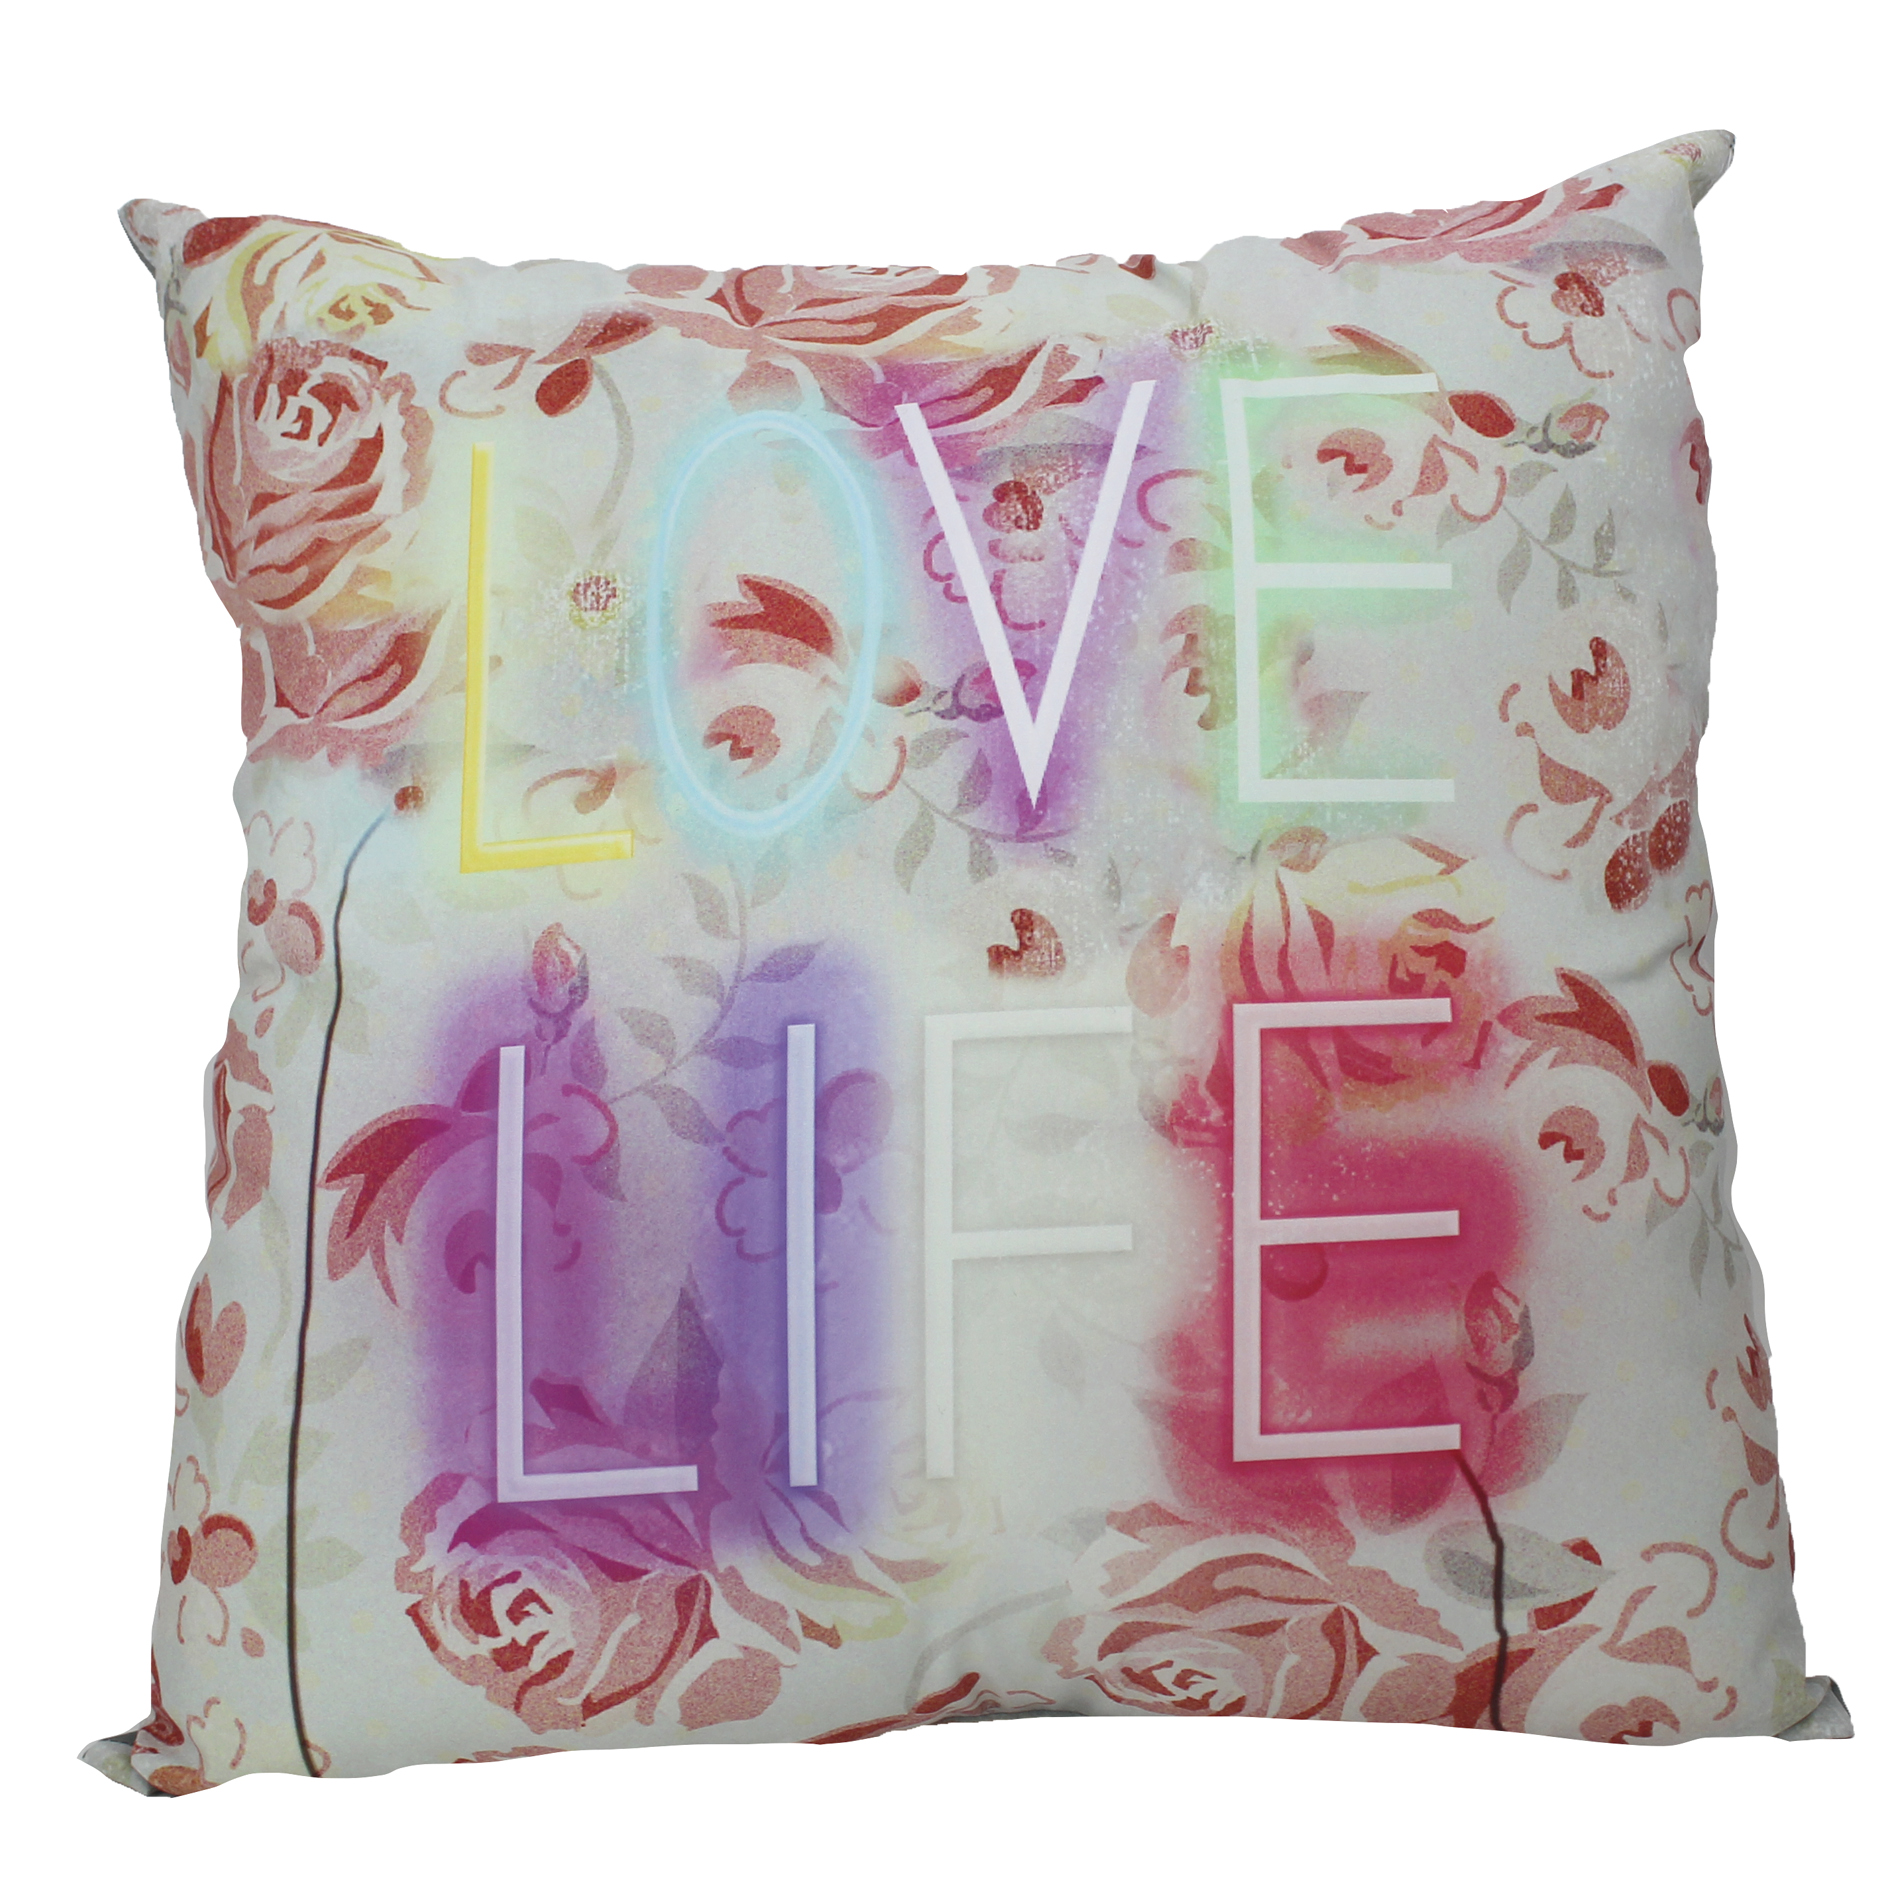 -Love Life Pillow